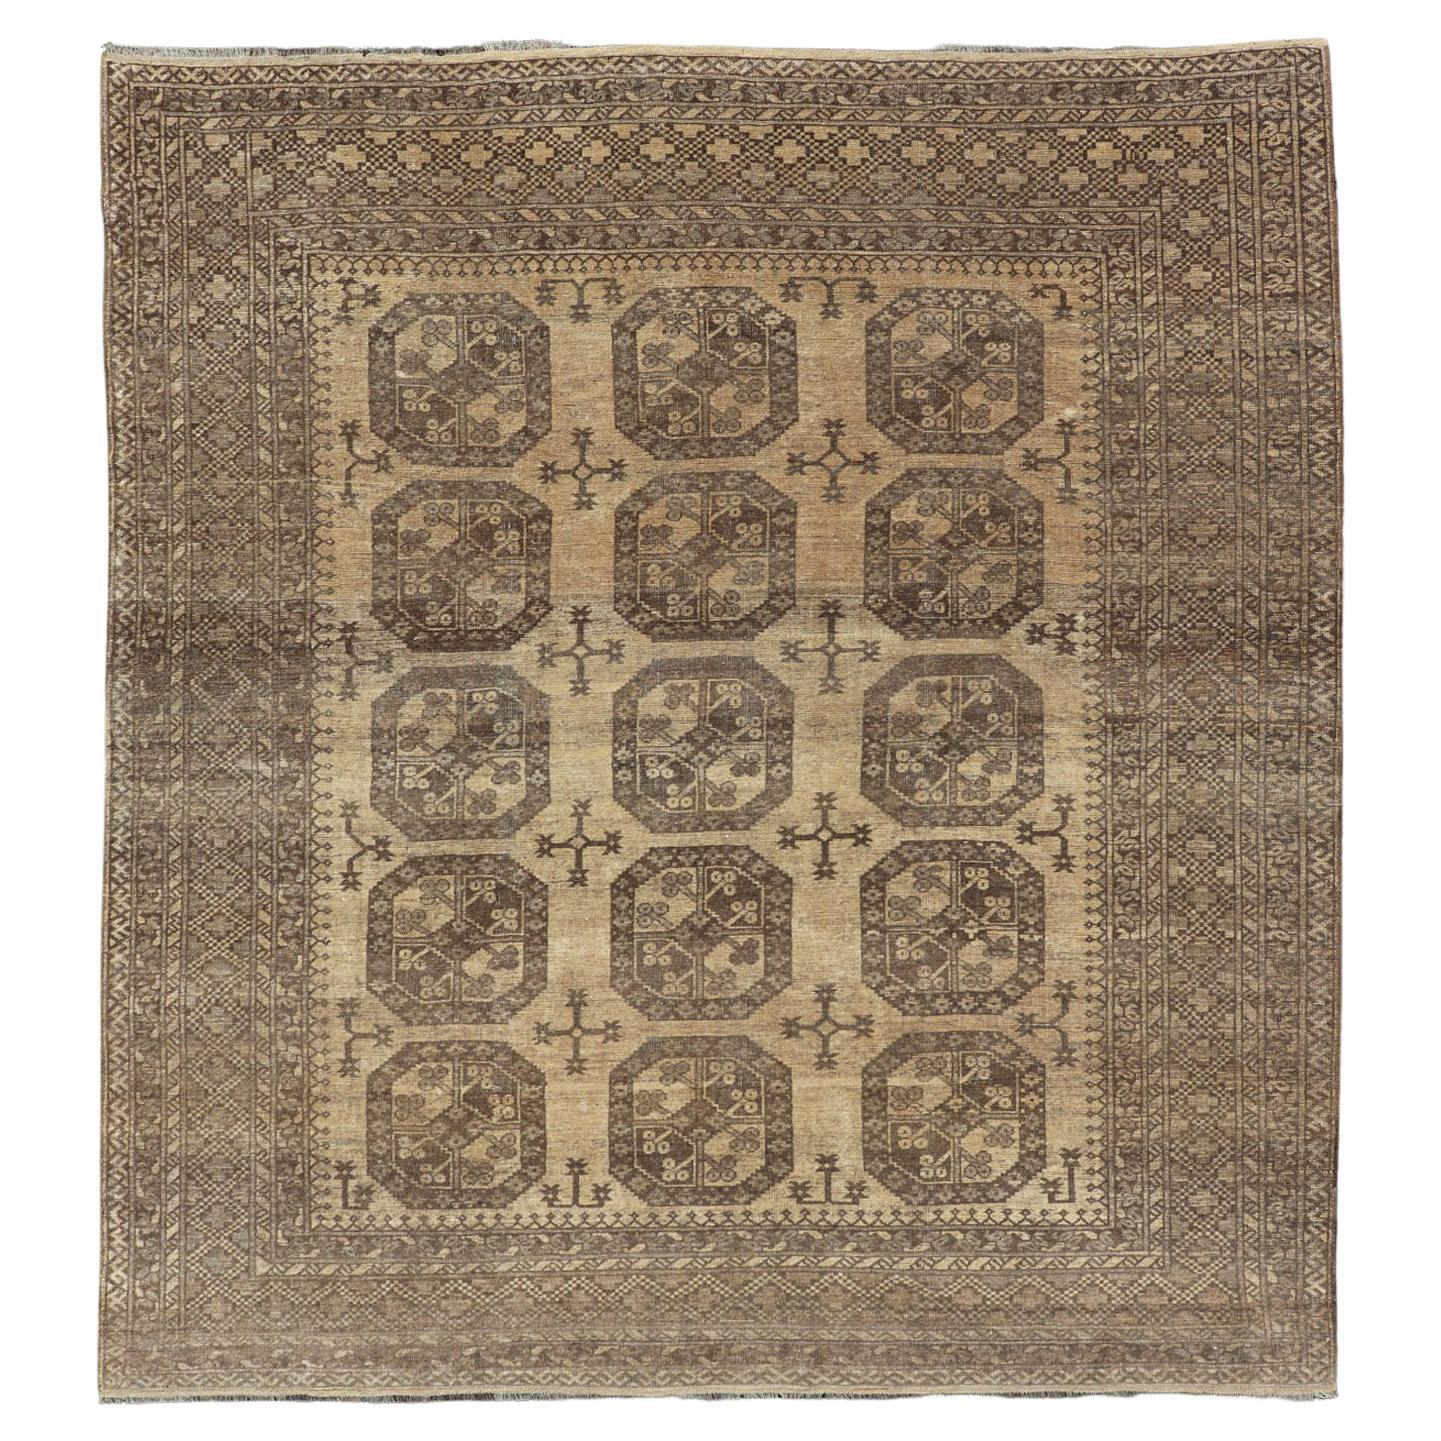 Vintage Turkomen Ersari Rug with Gul Design in Brown, Gray, Tan & Sand Colors For Sale